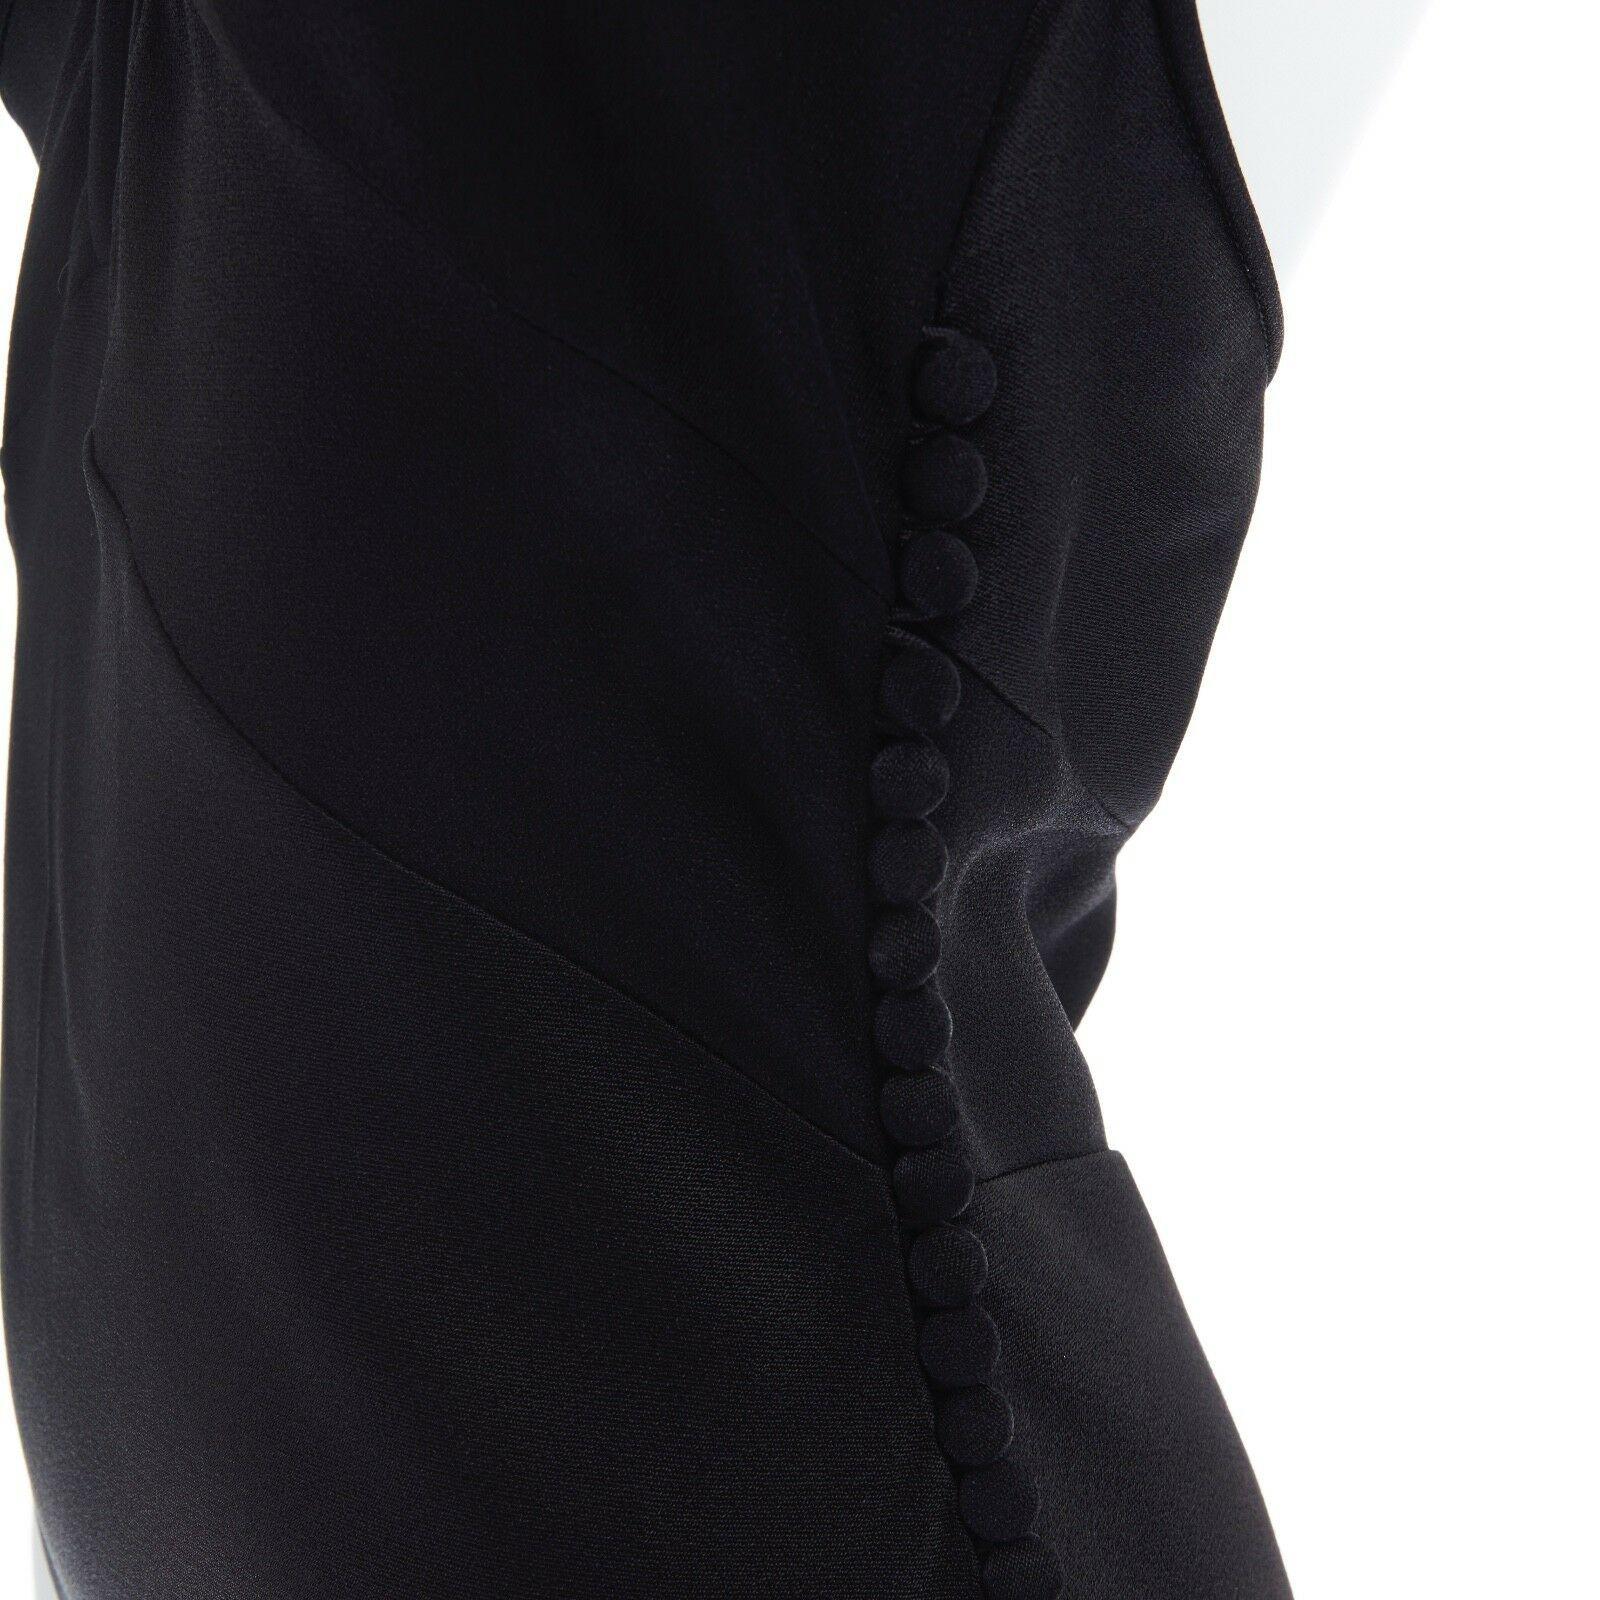 CHRISTIAN DIOR GALLIANO black halter keyhole backless dress gown FR40 US8 UK12 L 3